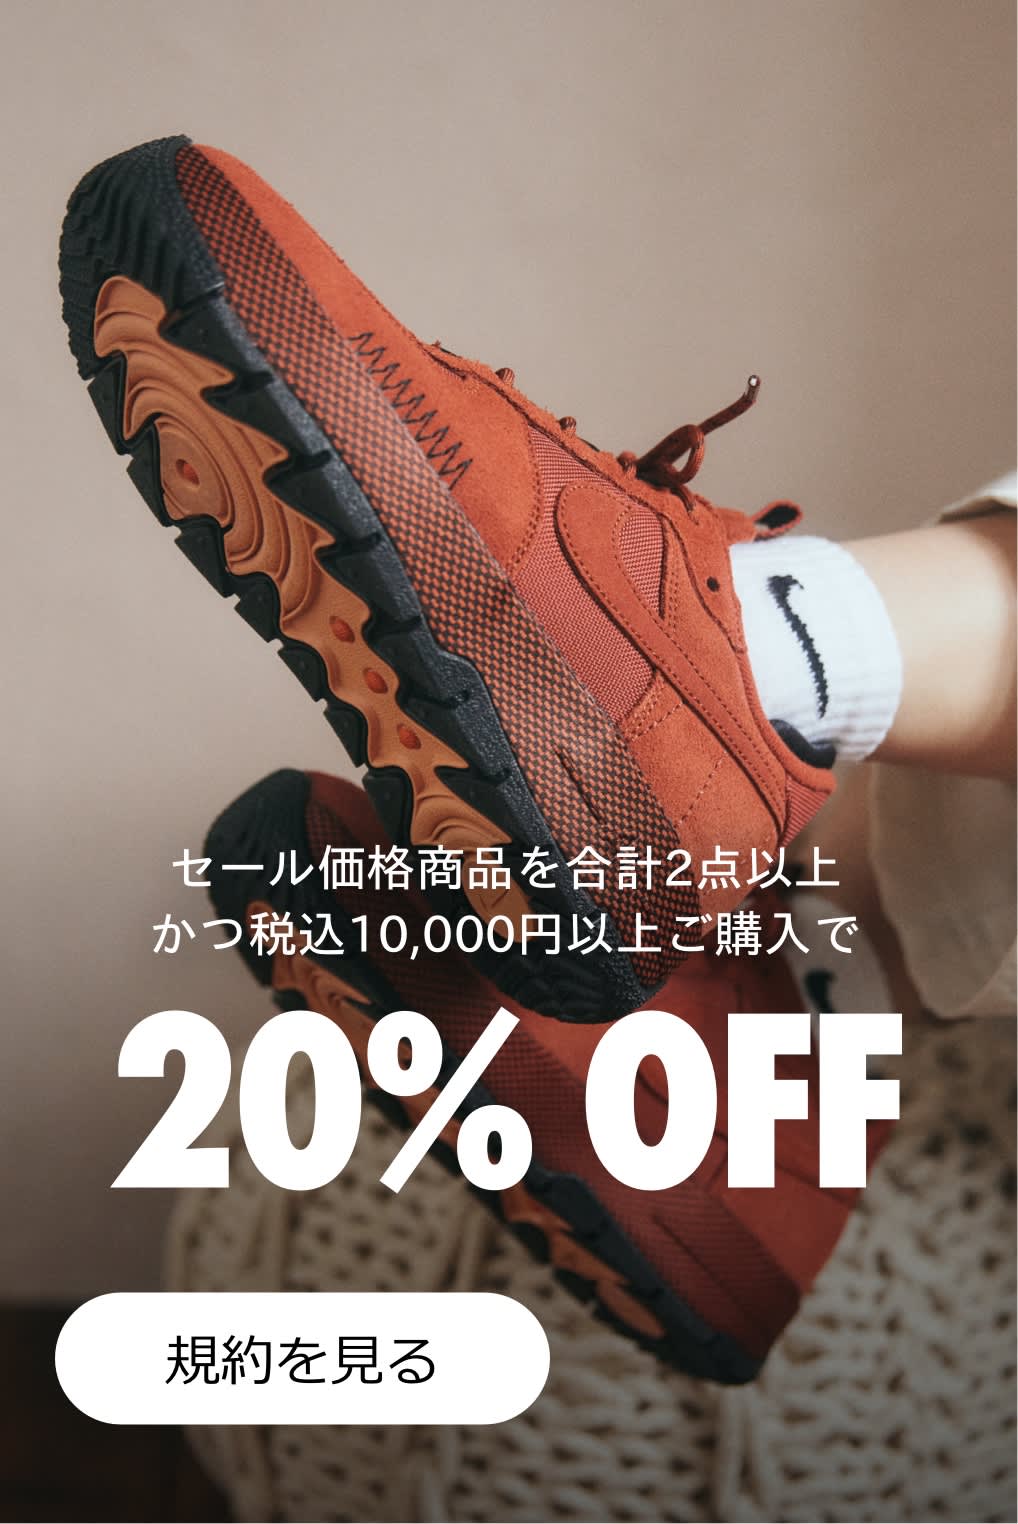 Sale Running Shoes. Nike JP